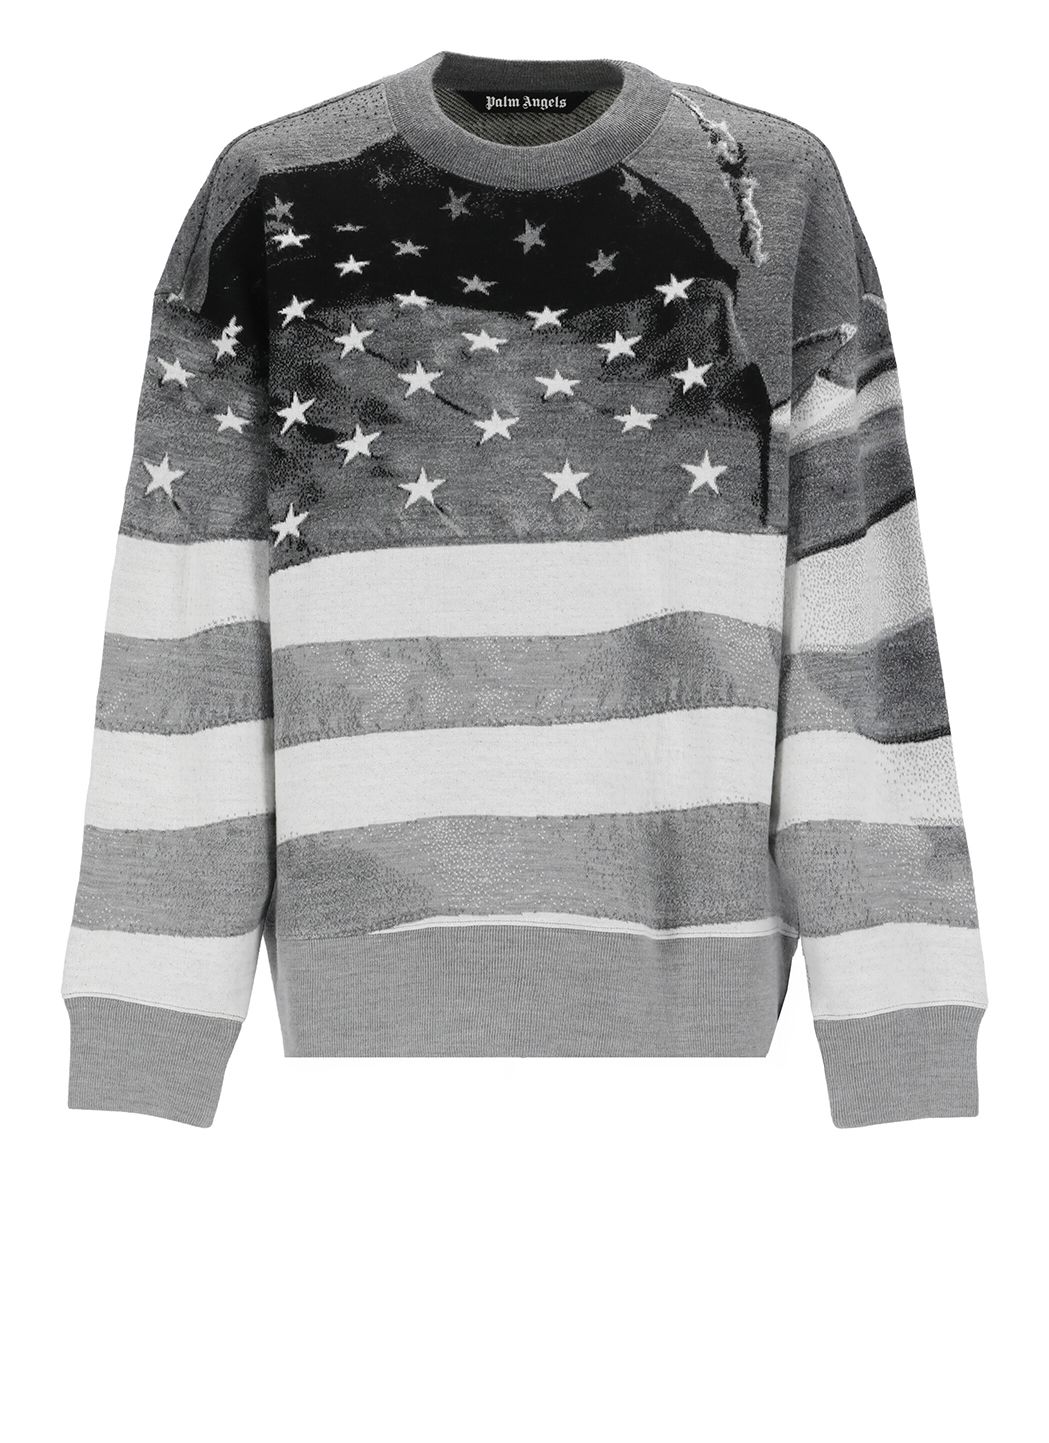 Flag sweater